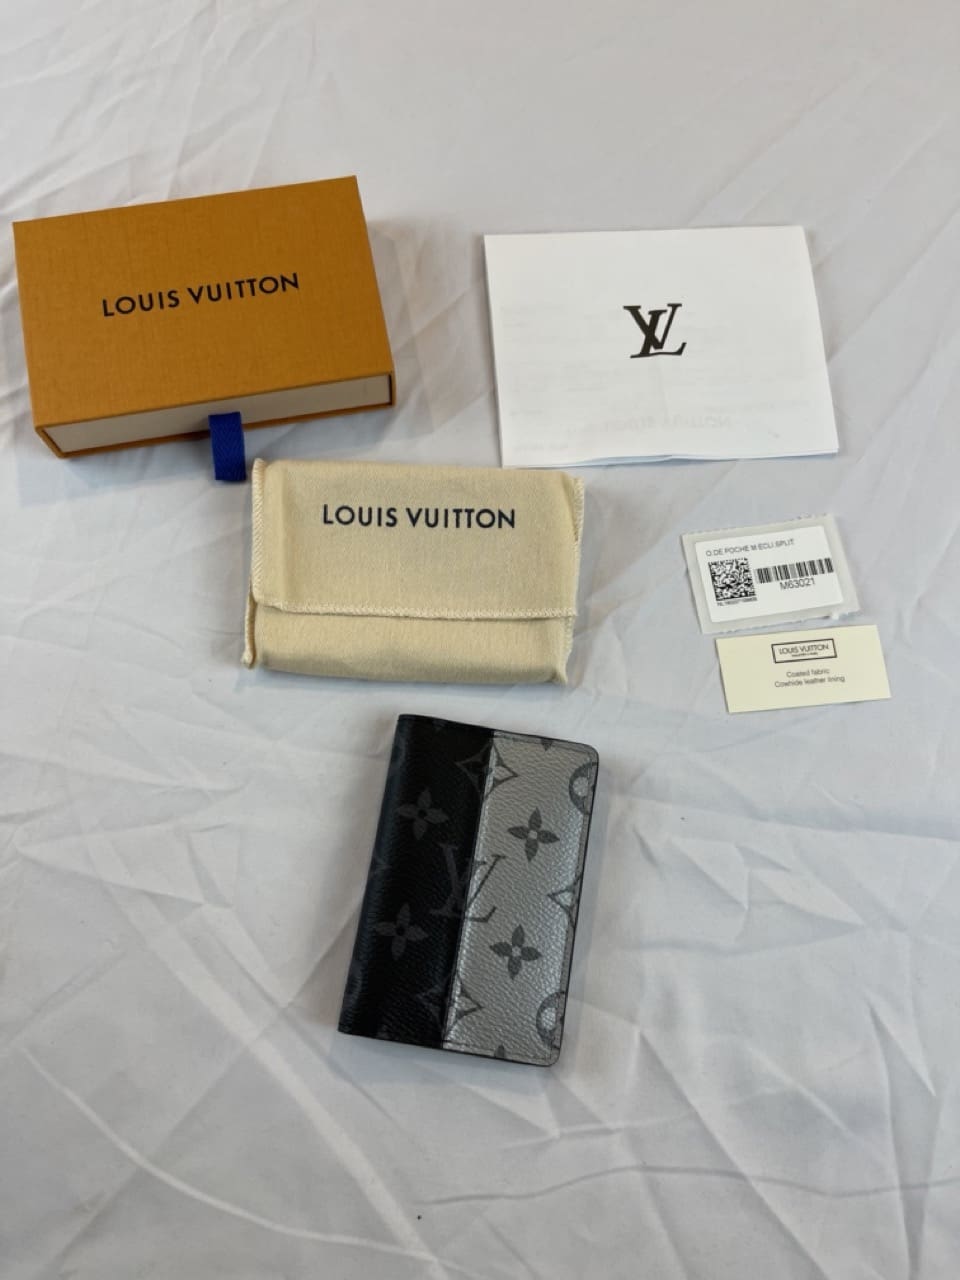 Louis Vuitton POCKET ORGANIZER Monogram 3.1 x 4.3 x 0.4 inches